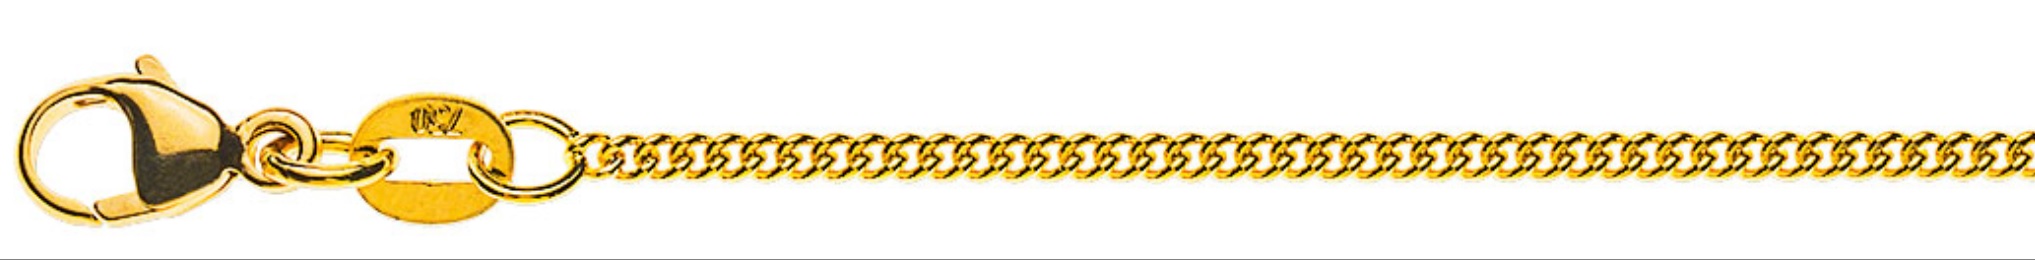 AURONOS Prestige Necklace yellow gold 18K round curb chain 60cm 1.6mm